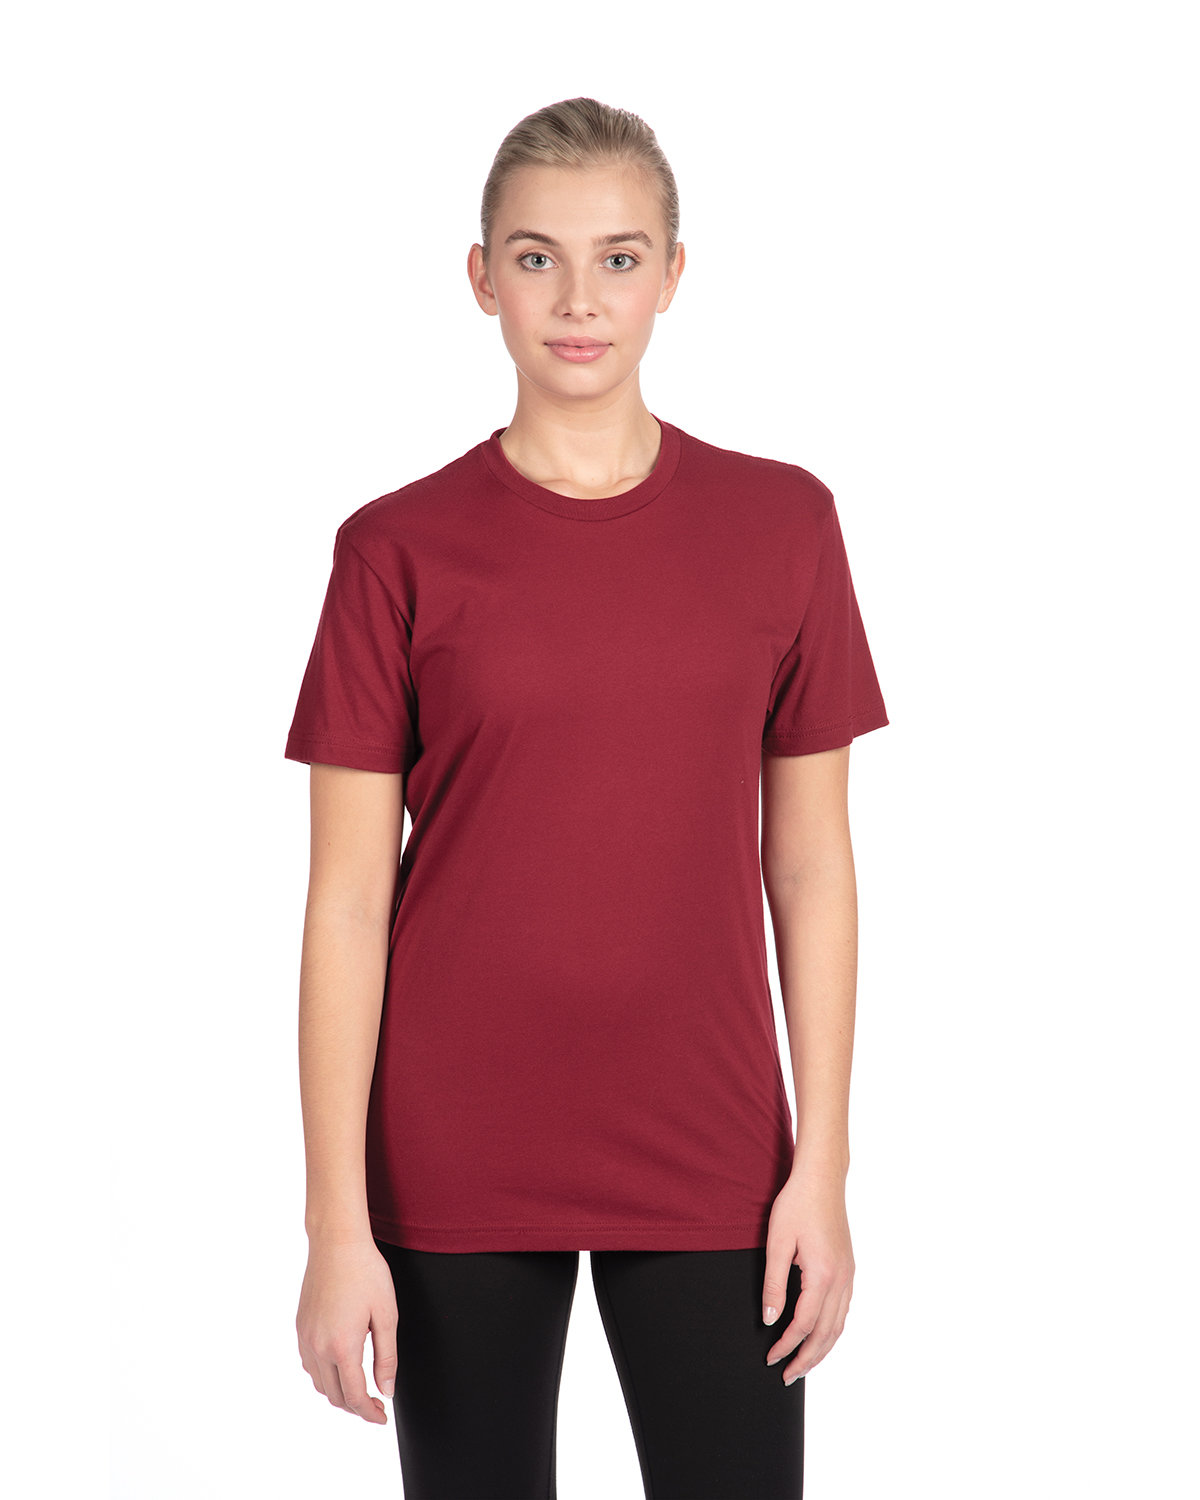 Next Level Unisex Cotton T-Shirt CARDINAL 